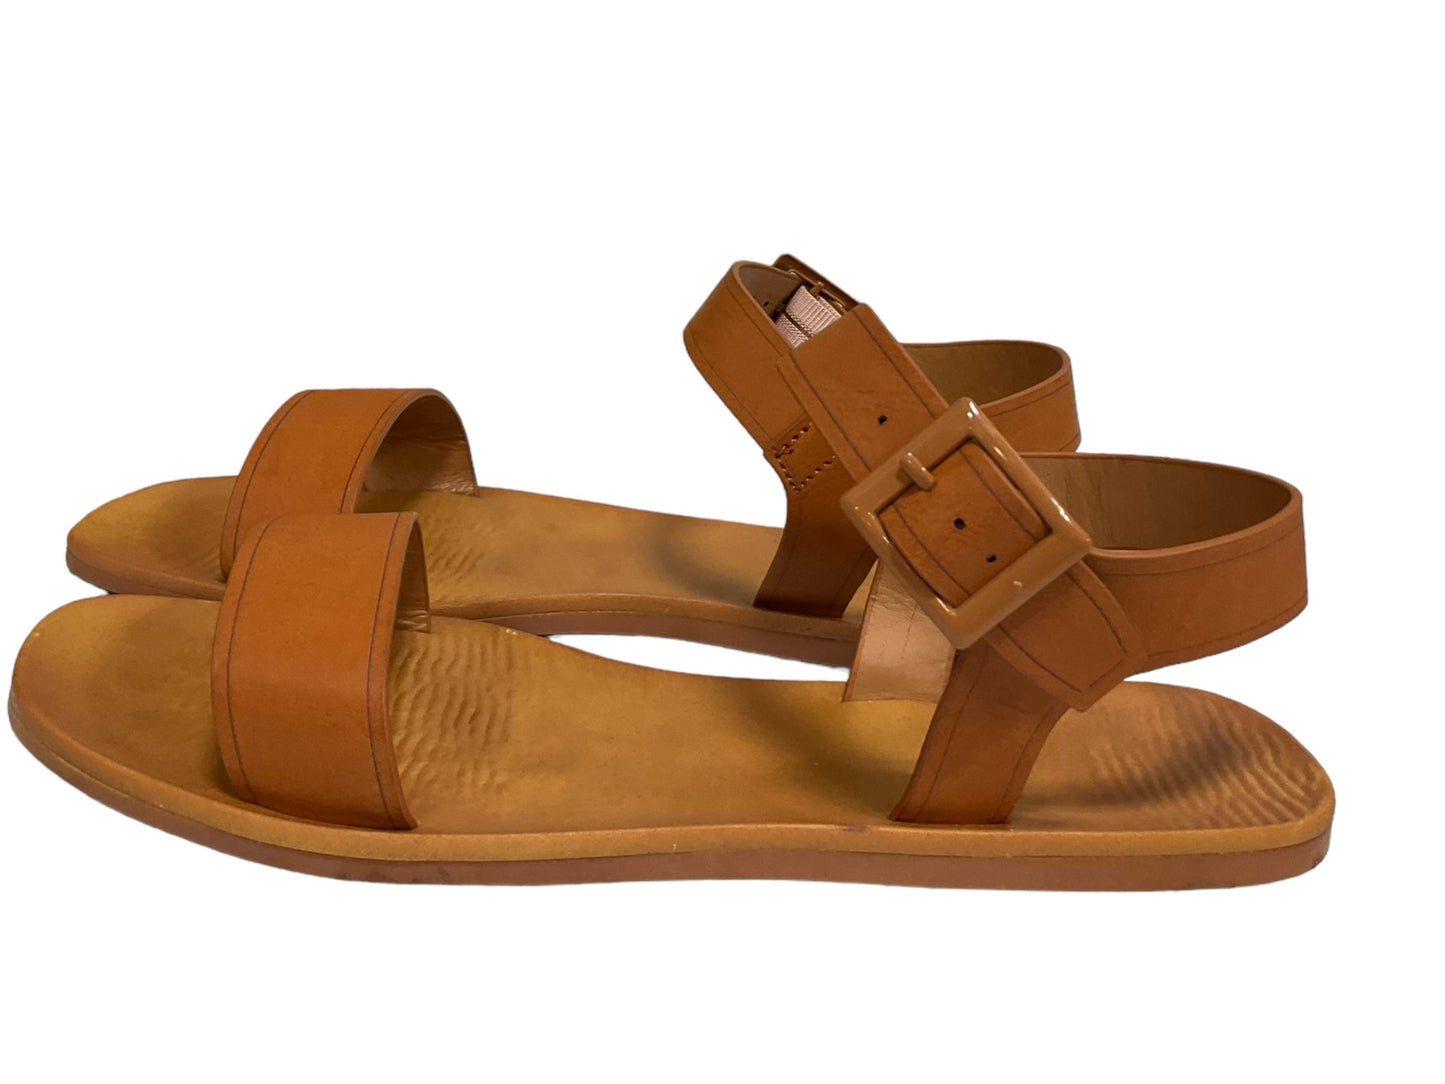 Tan Sandals Flats Bamboo, Size 8